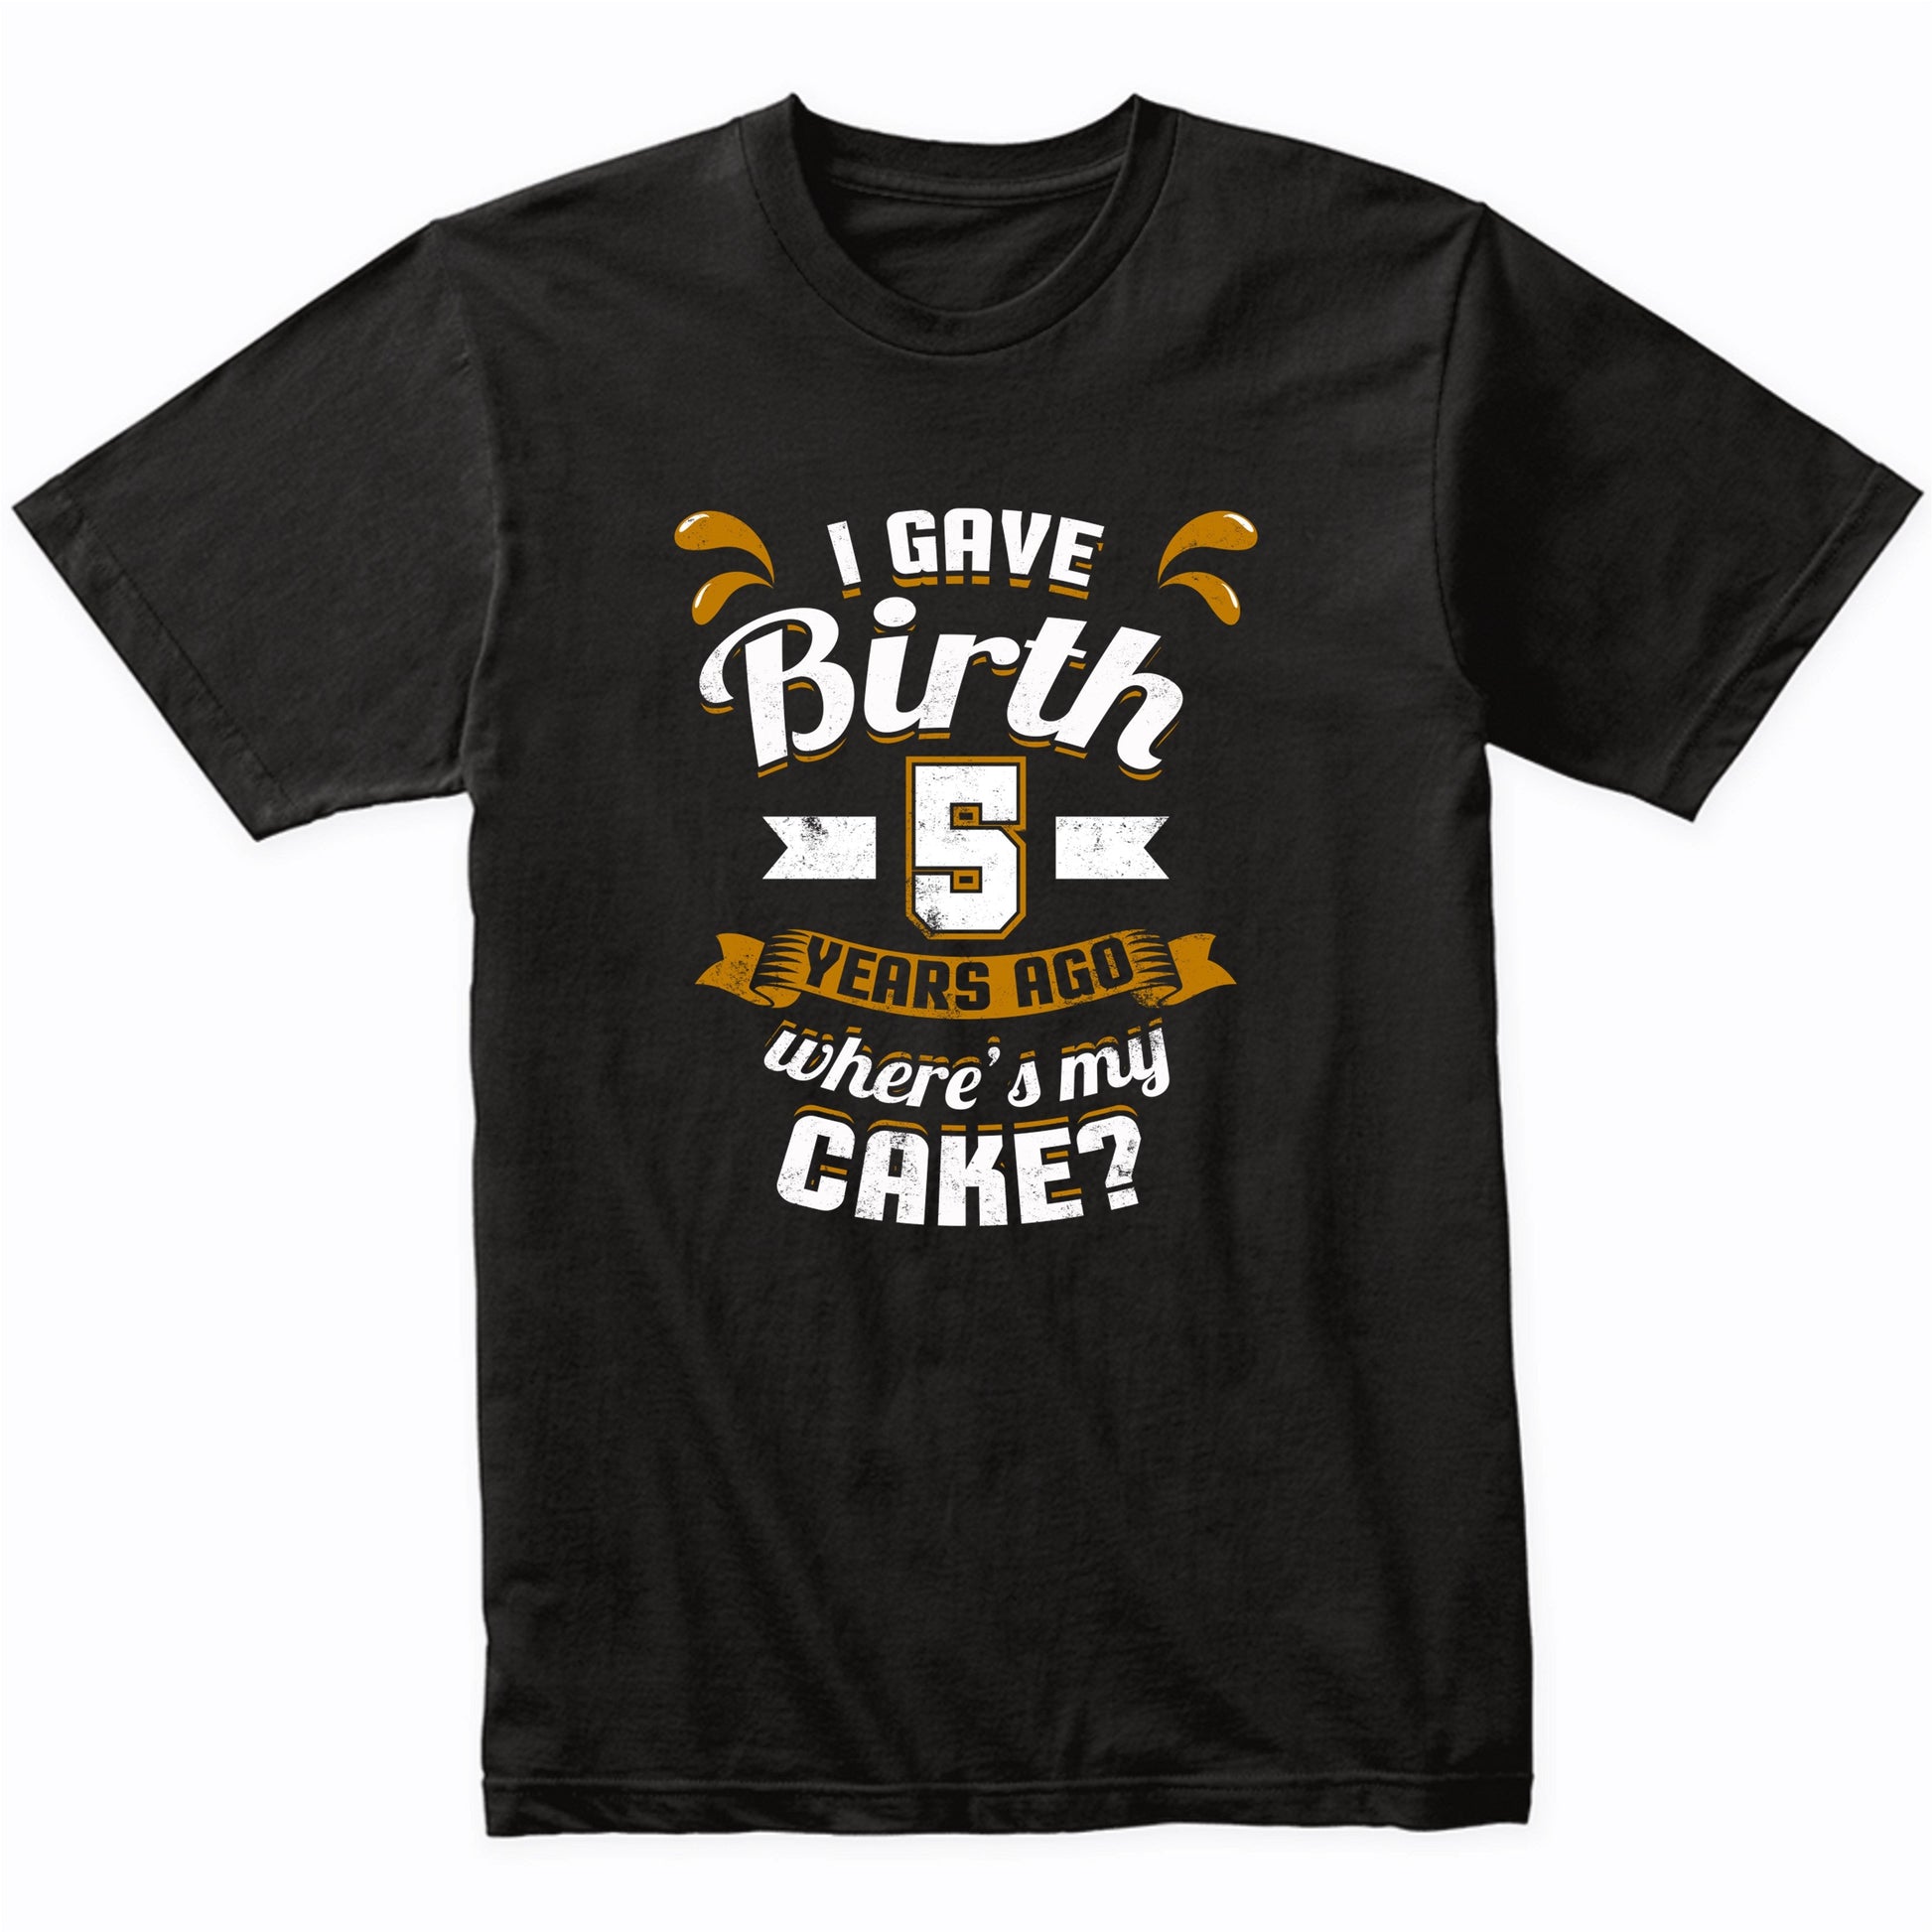 5th Birthday Shirt For Mom I Gave Birth 5 Years Ago Where's My Cake?